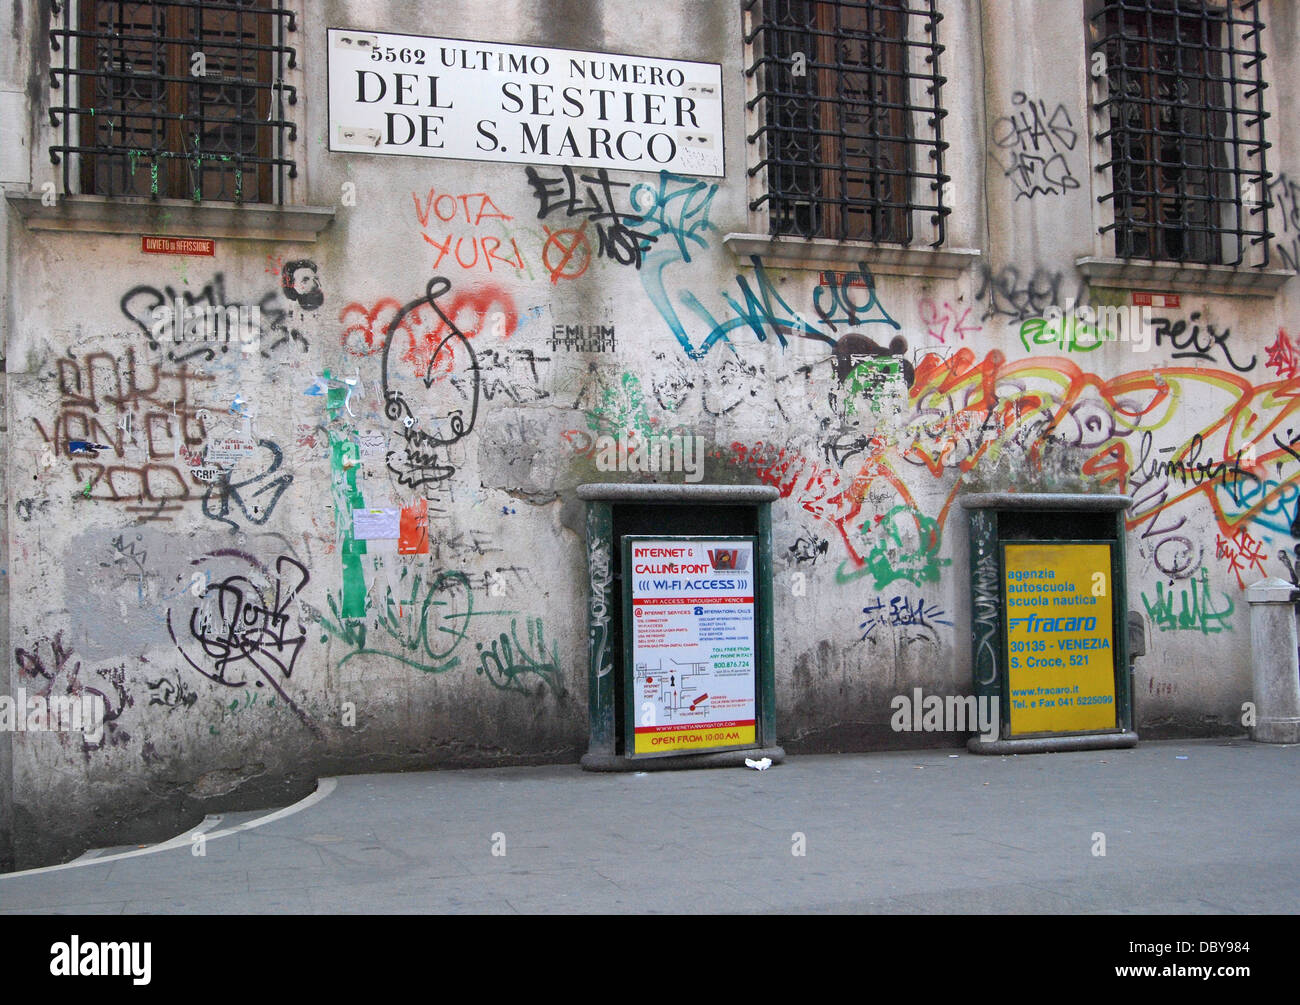 Graffiti In Italy